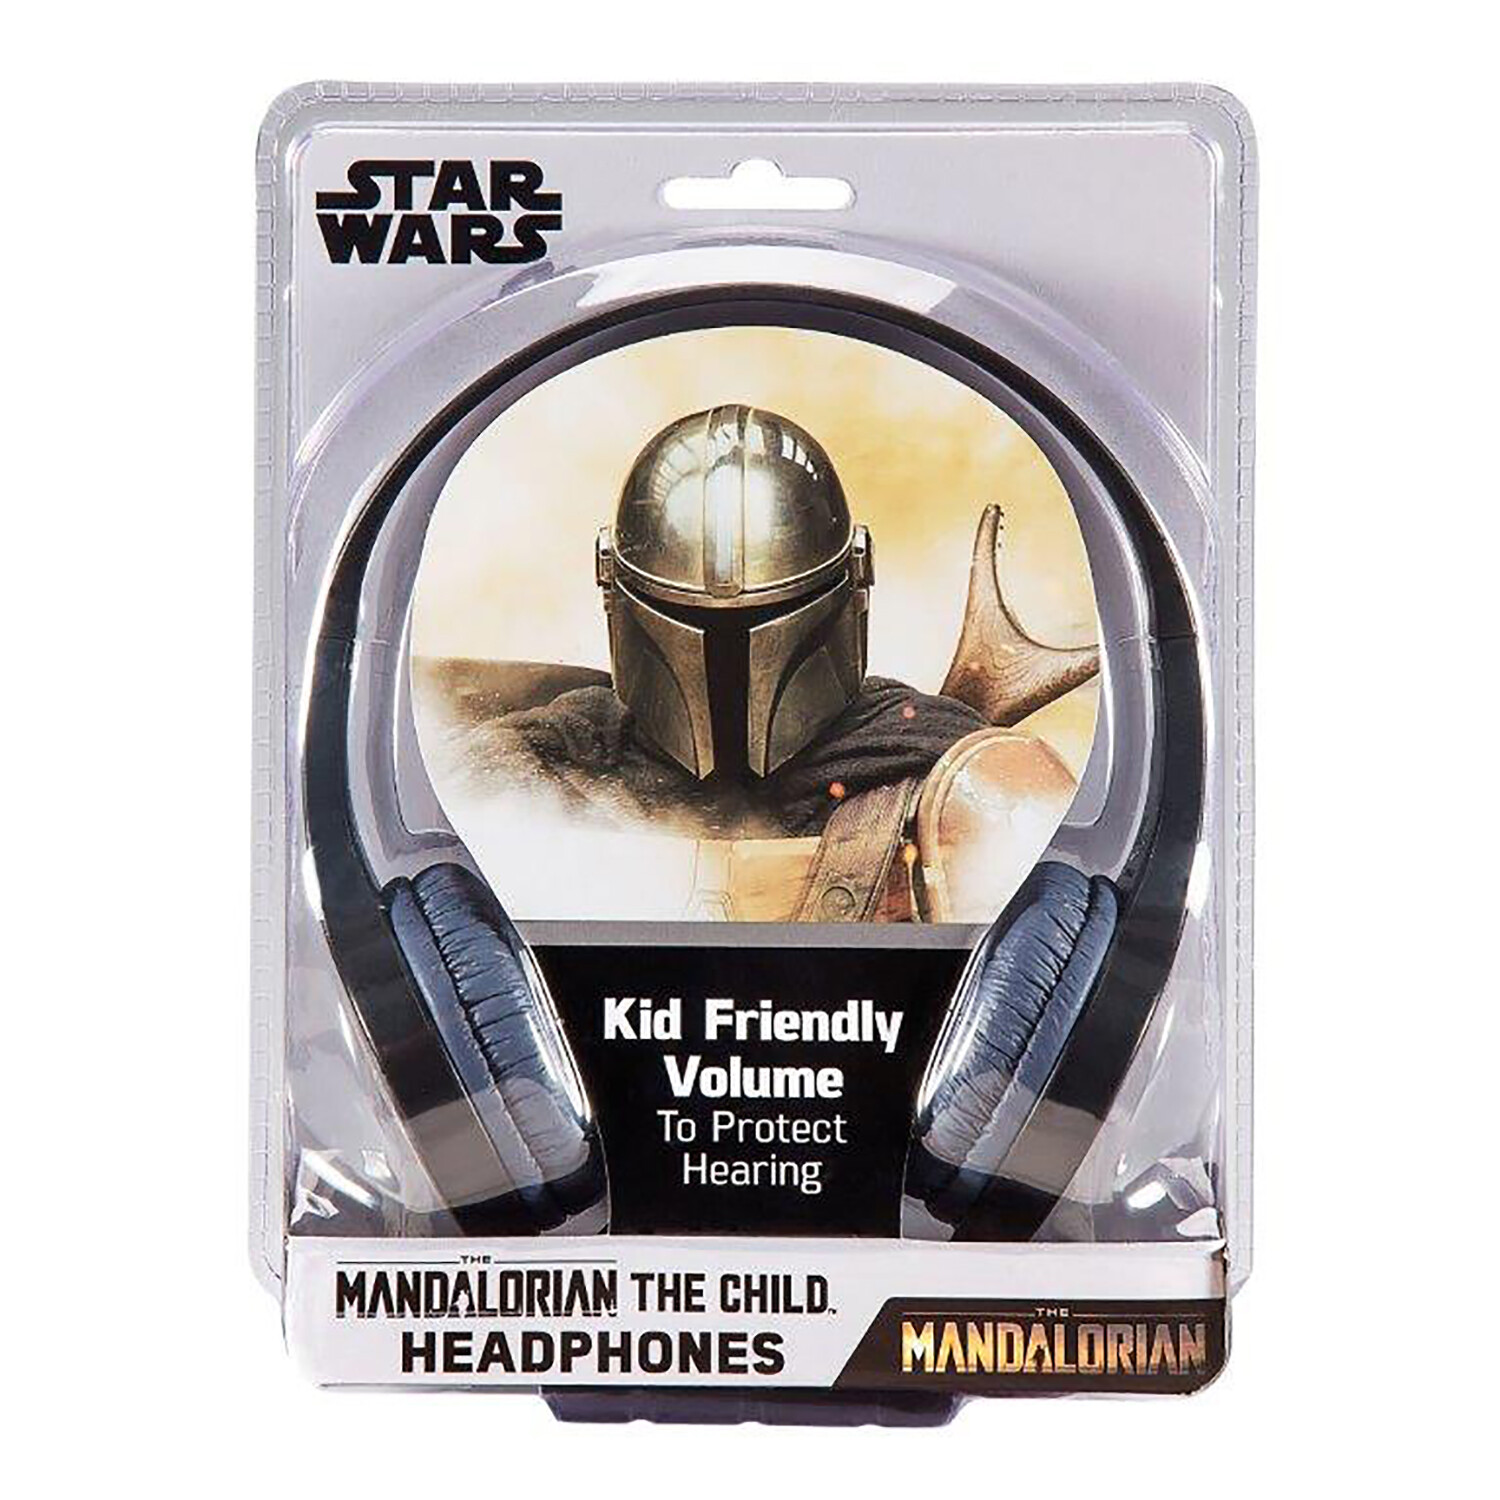 Star Wars The Mandalorian White Headphones Image 1